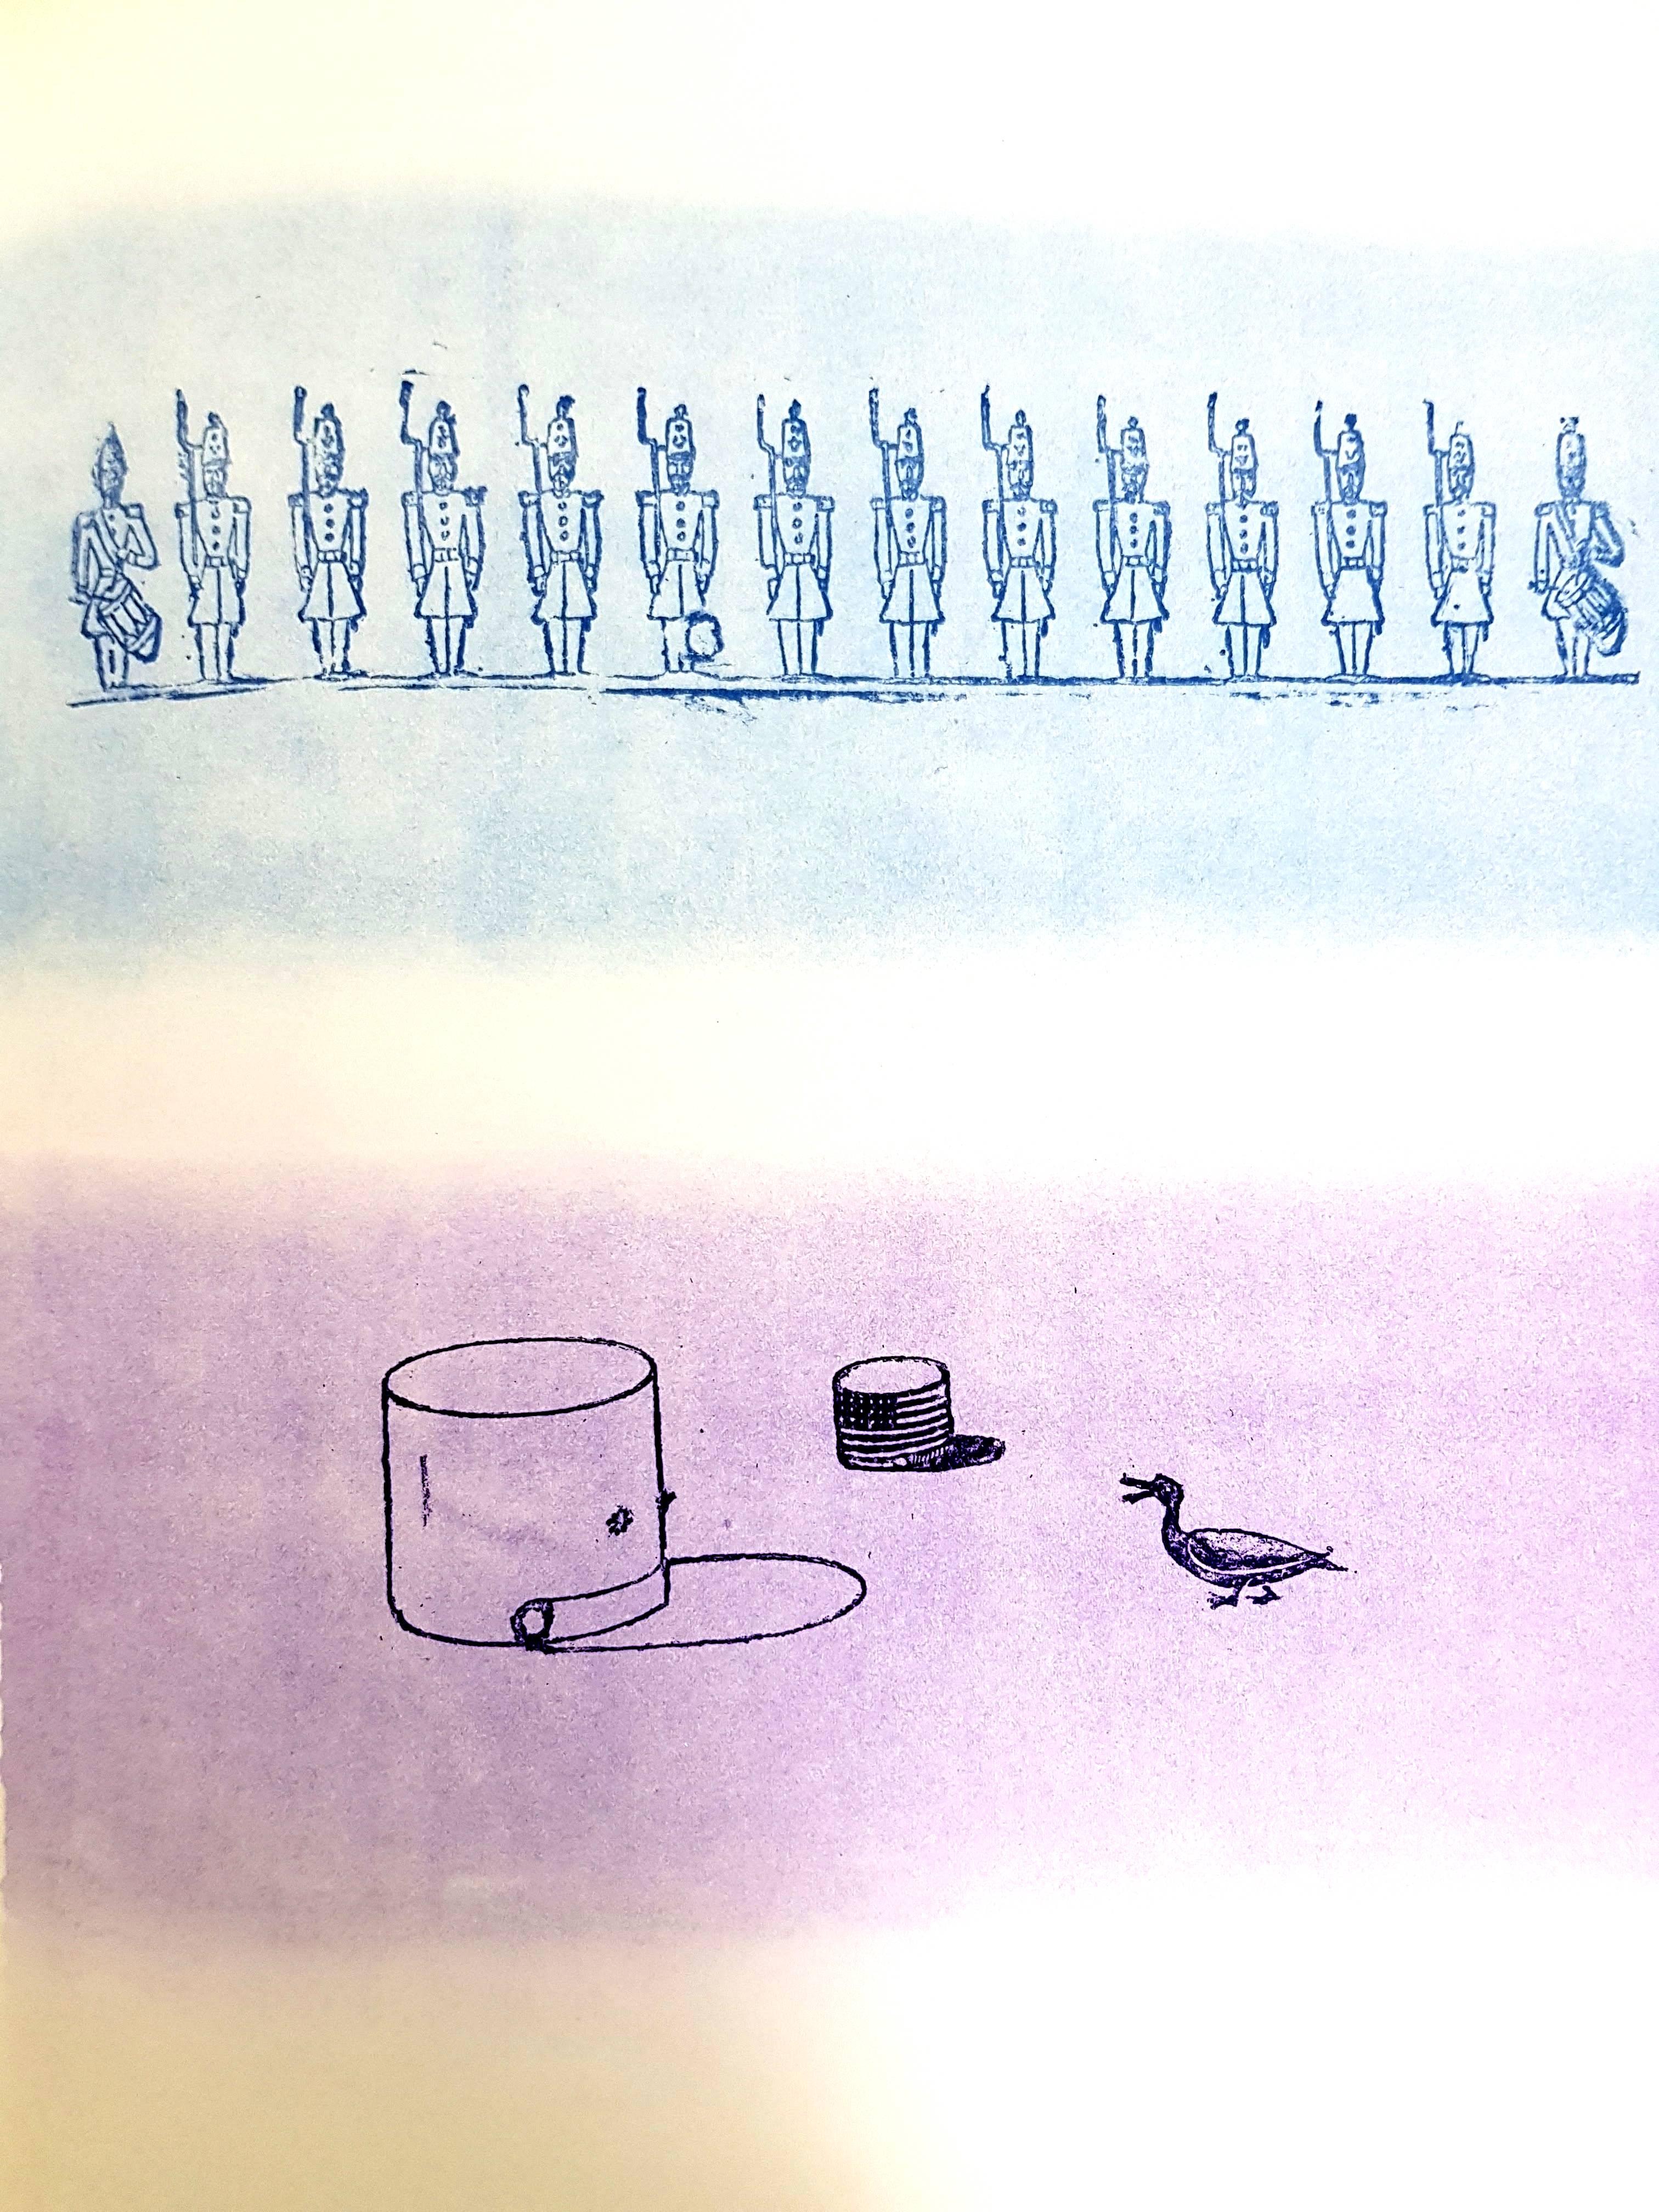 Max Ernst (1891-1976) 
Georges Ribemont-Dessaignes, La Ballade du Soldat, Pierre Chave, Vence, 1972 
Farblithografien auf Arches-Papier
1972
Abmessungen: 40 x 30 cm
Referenz: Spies & Leppien 218

Max Ernst
Max Ernst, der in den 1910er und 1920er